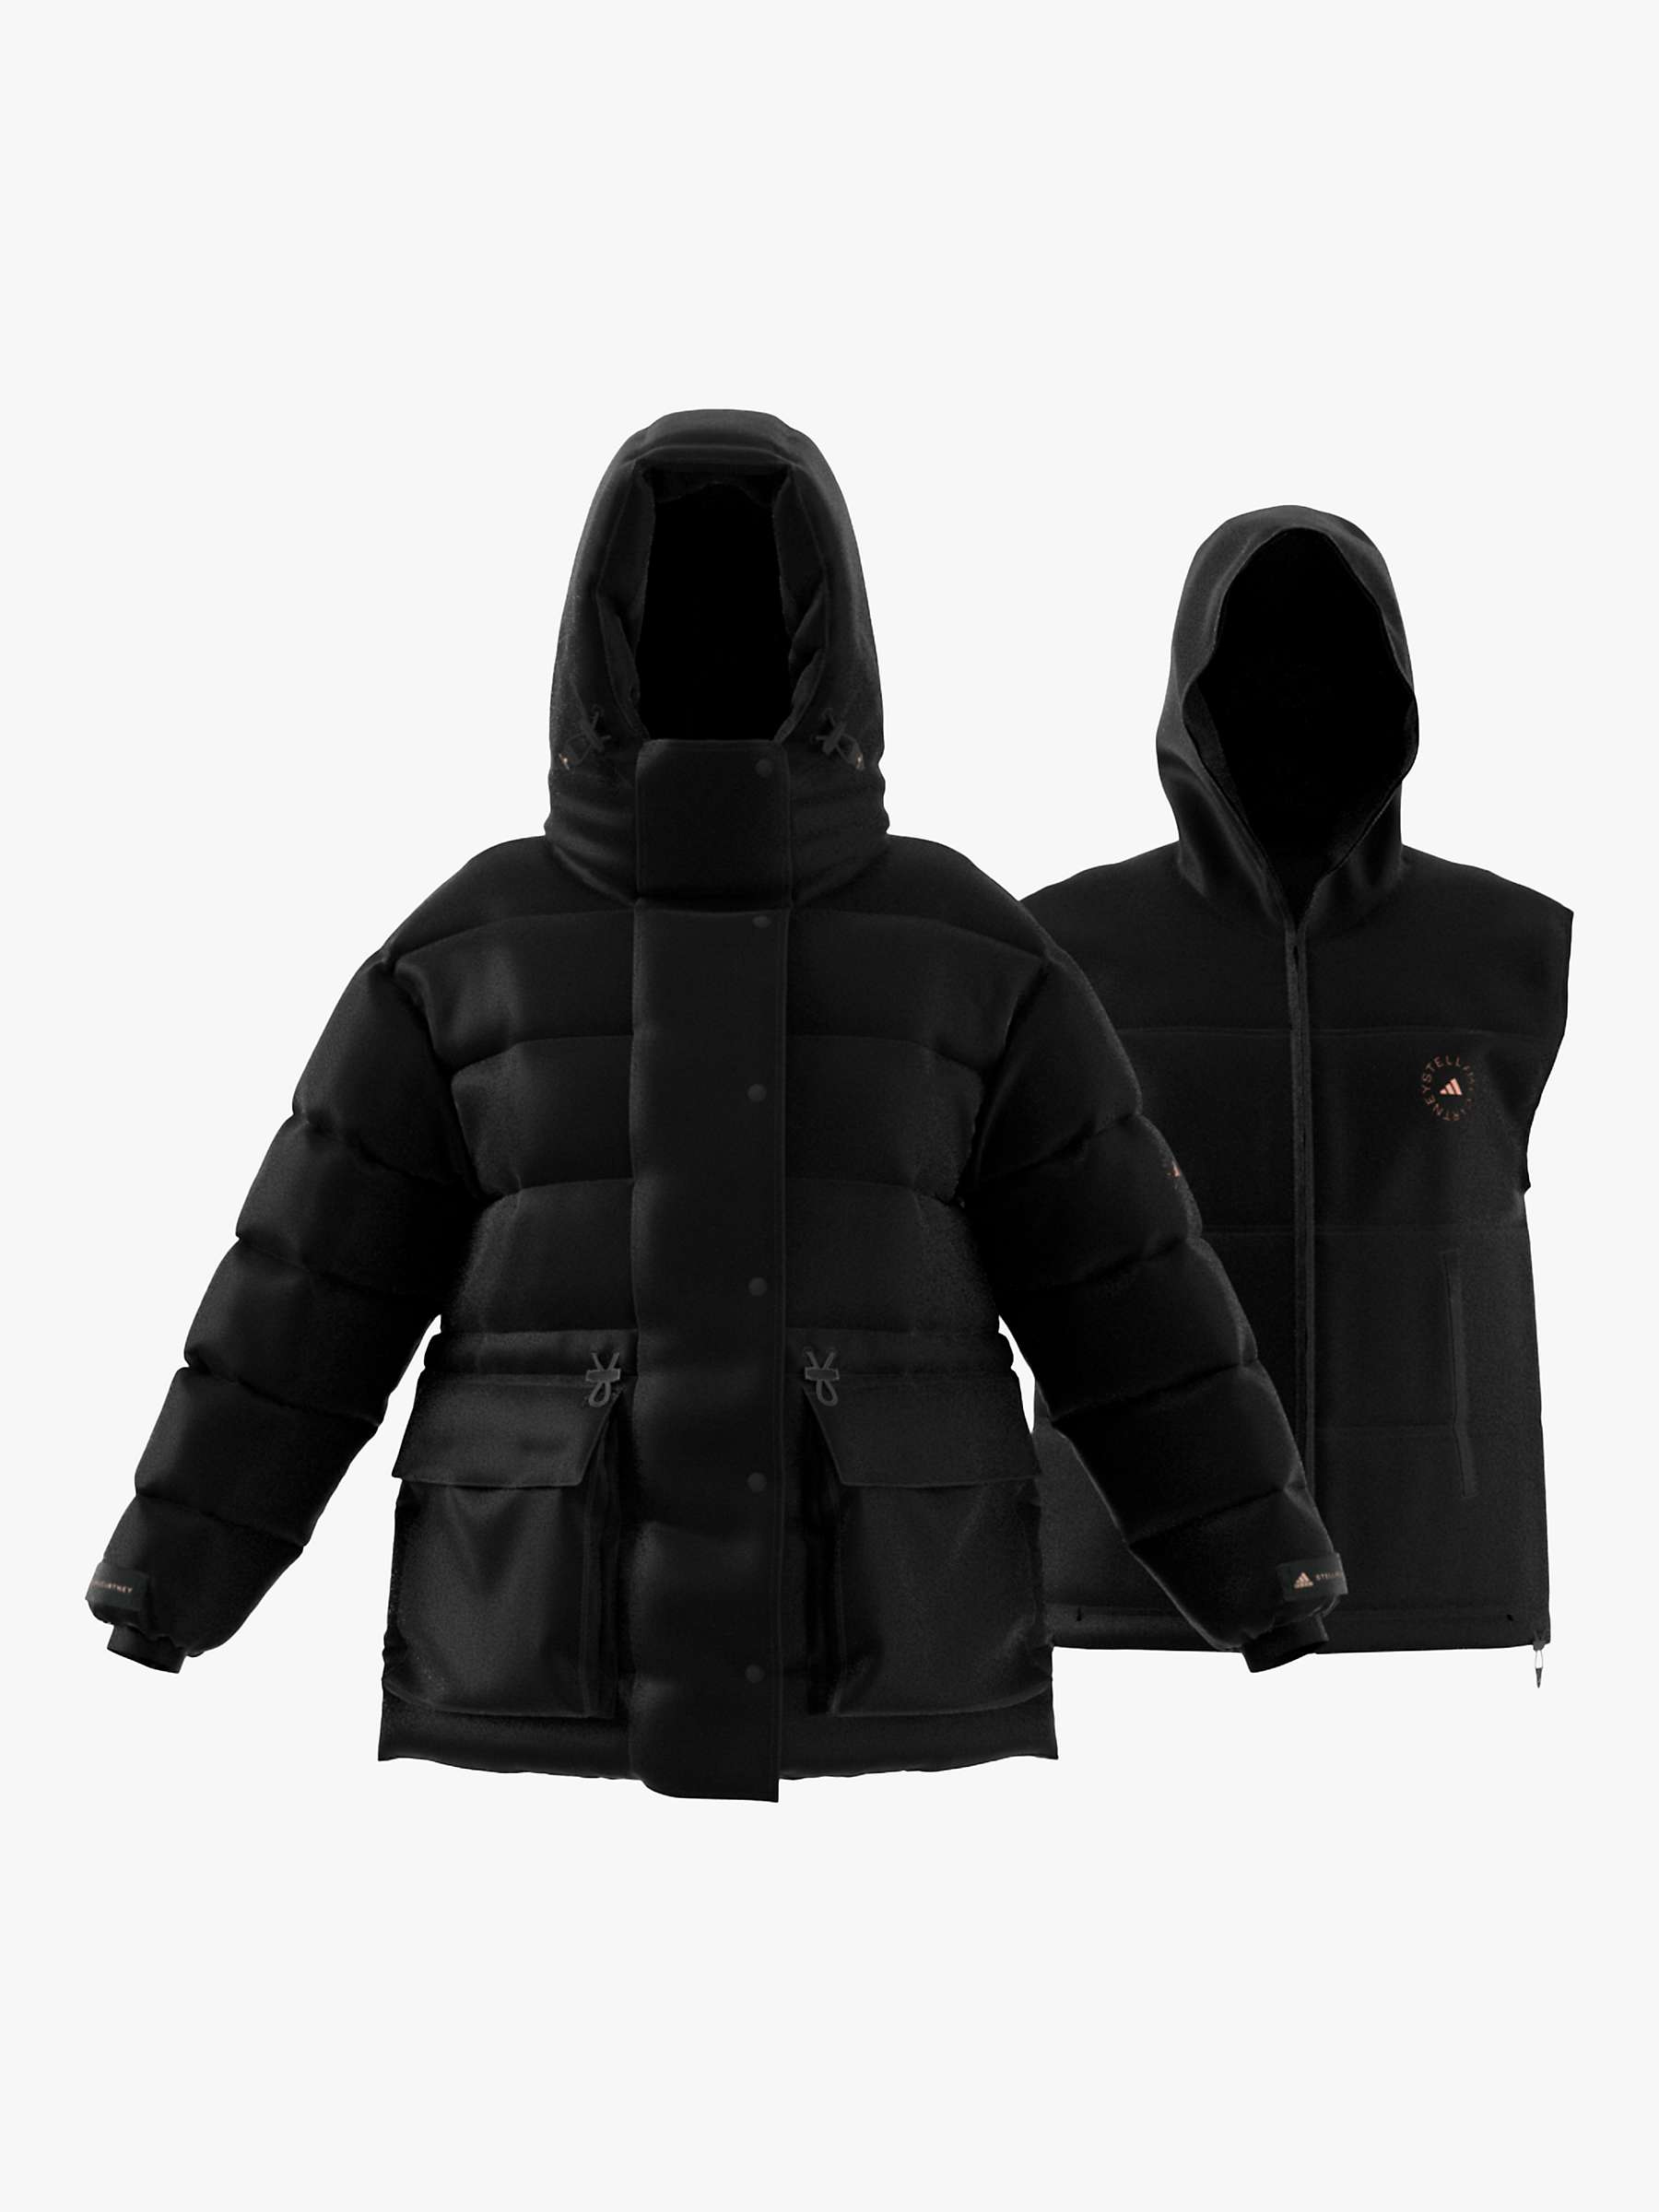 Adidas By Stella Mccartney 2 In 1 Padded Puffer Jacket Black At John Lewis Partners